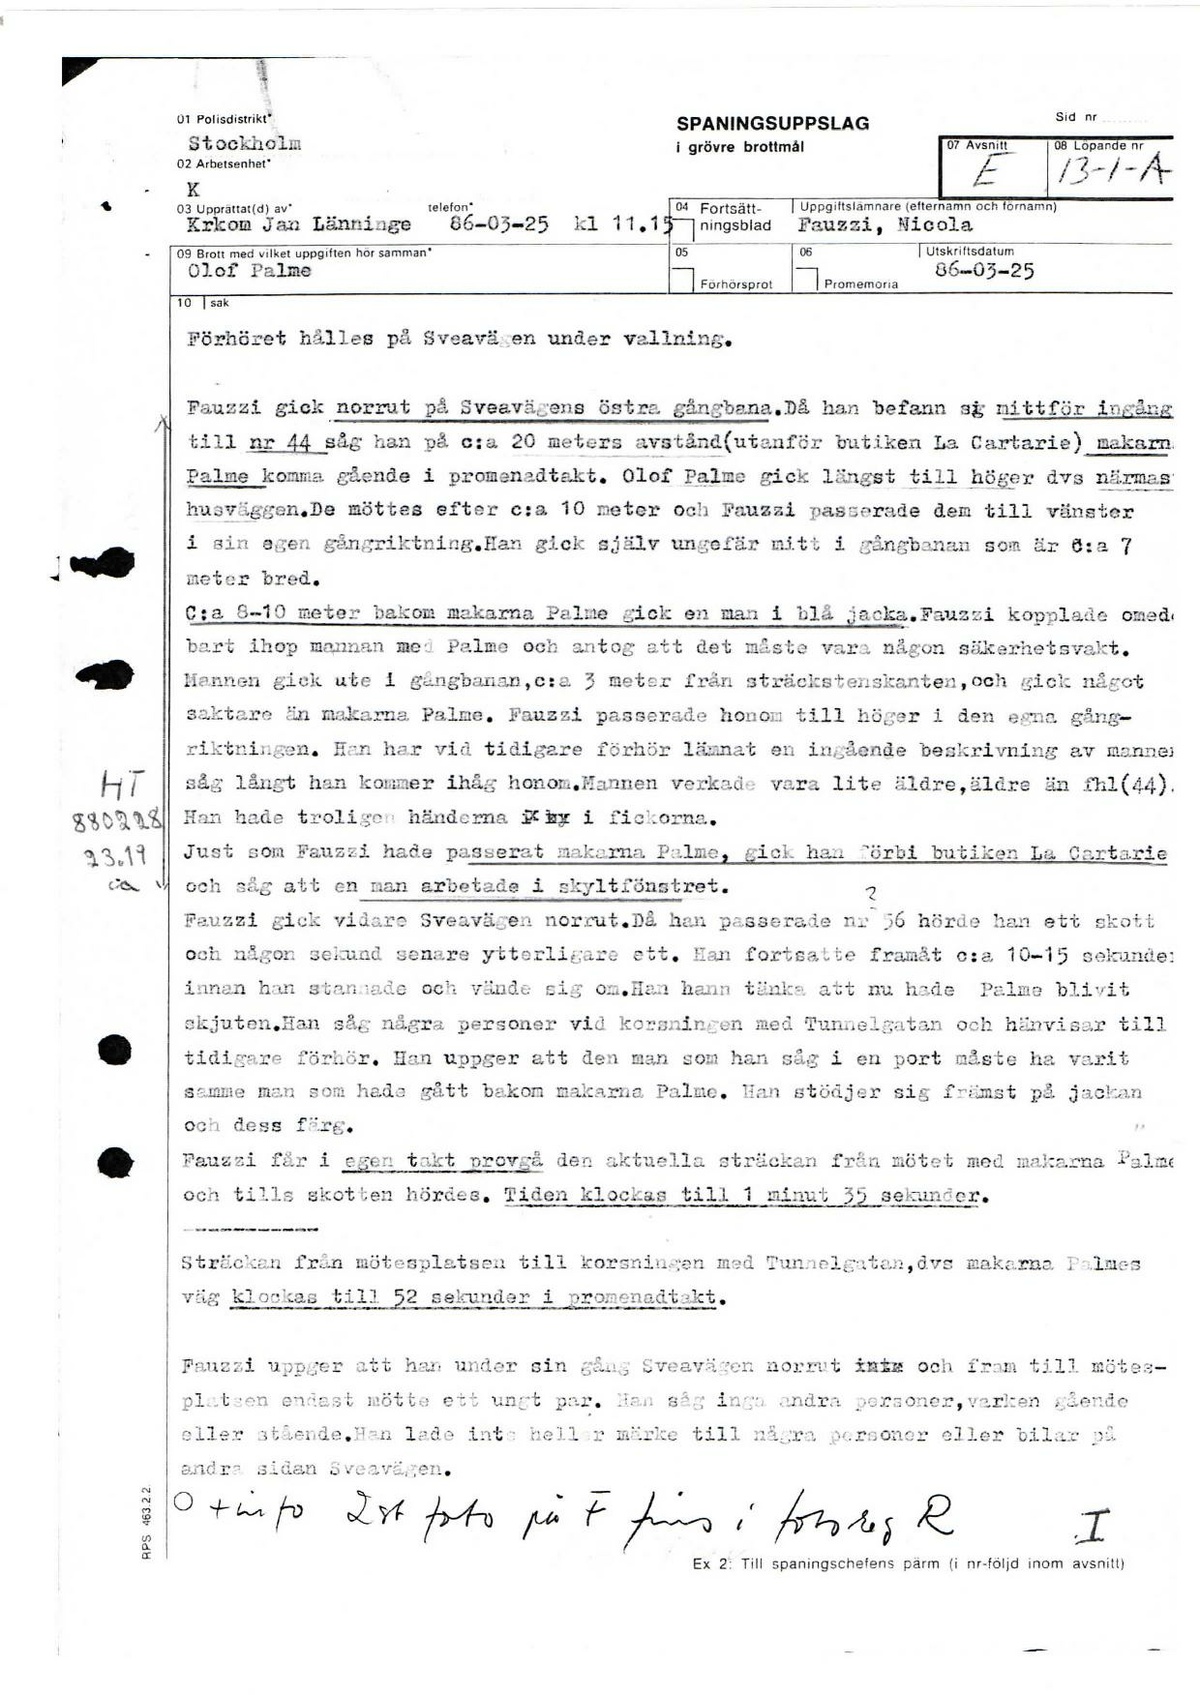 Pol-1986-03-25 E13-01-A Mordplatsvittne-Fauzzi-Nicola-VallningsFörhör.pdf